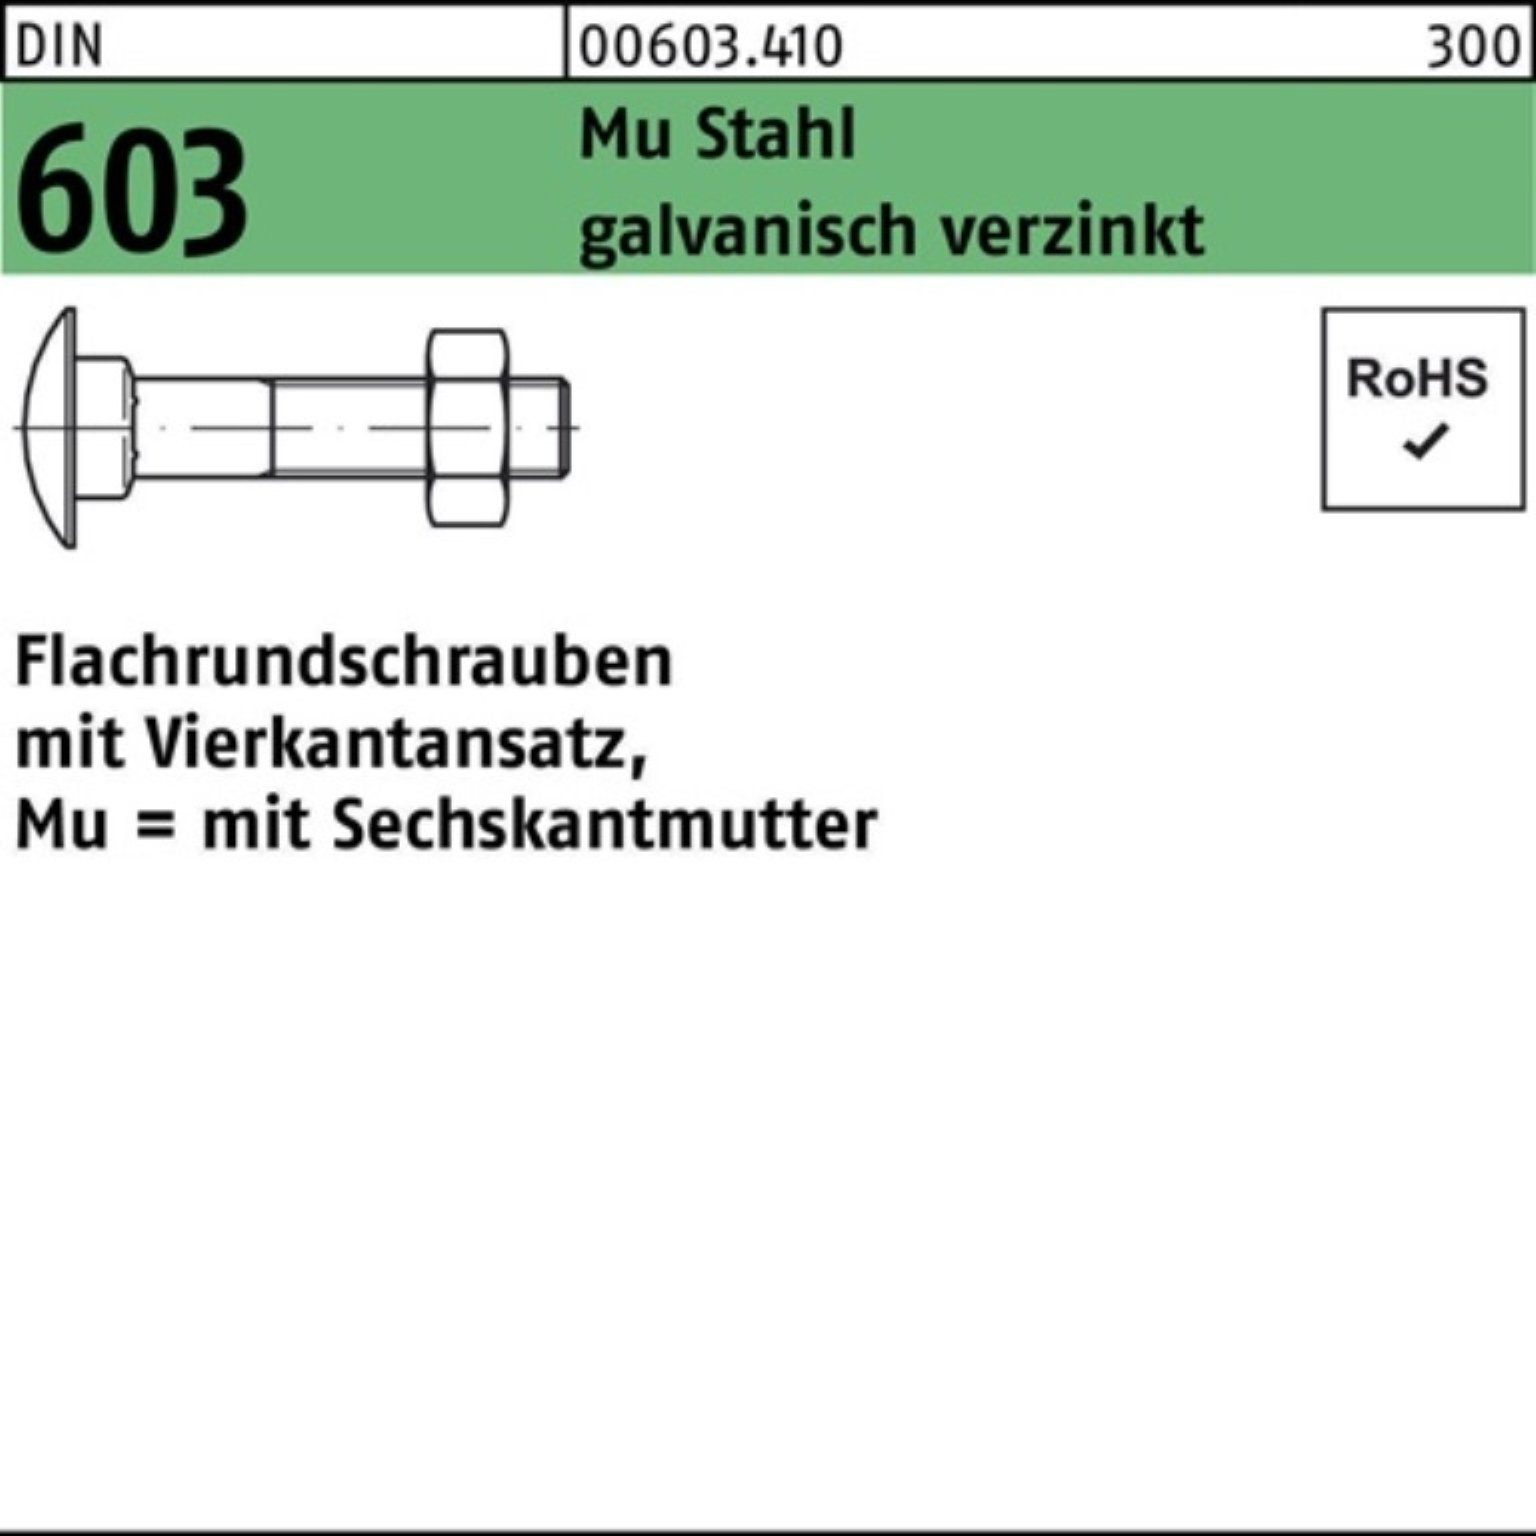 100er Reyher Flachrundschraube M16x300 Pack Vierkantansatz/6-ktmutter 603 DIN Schraube